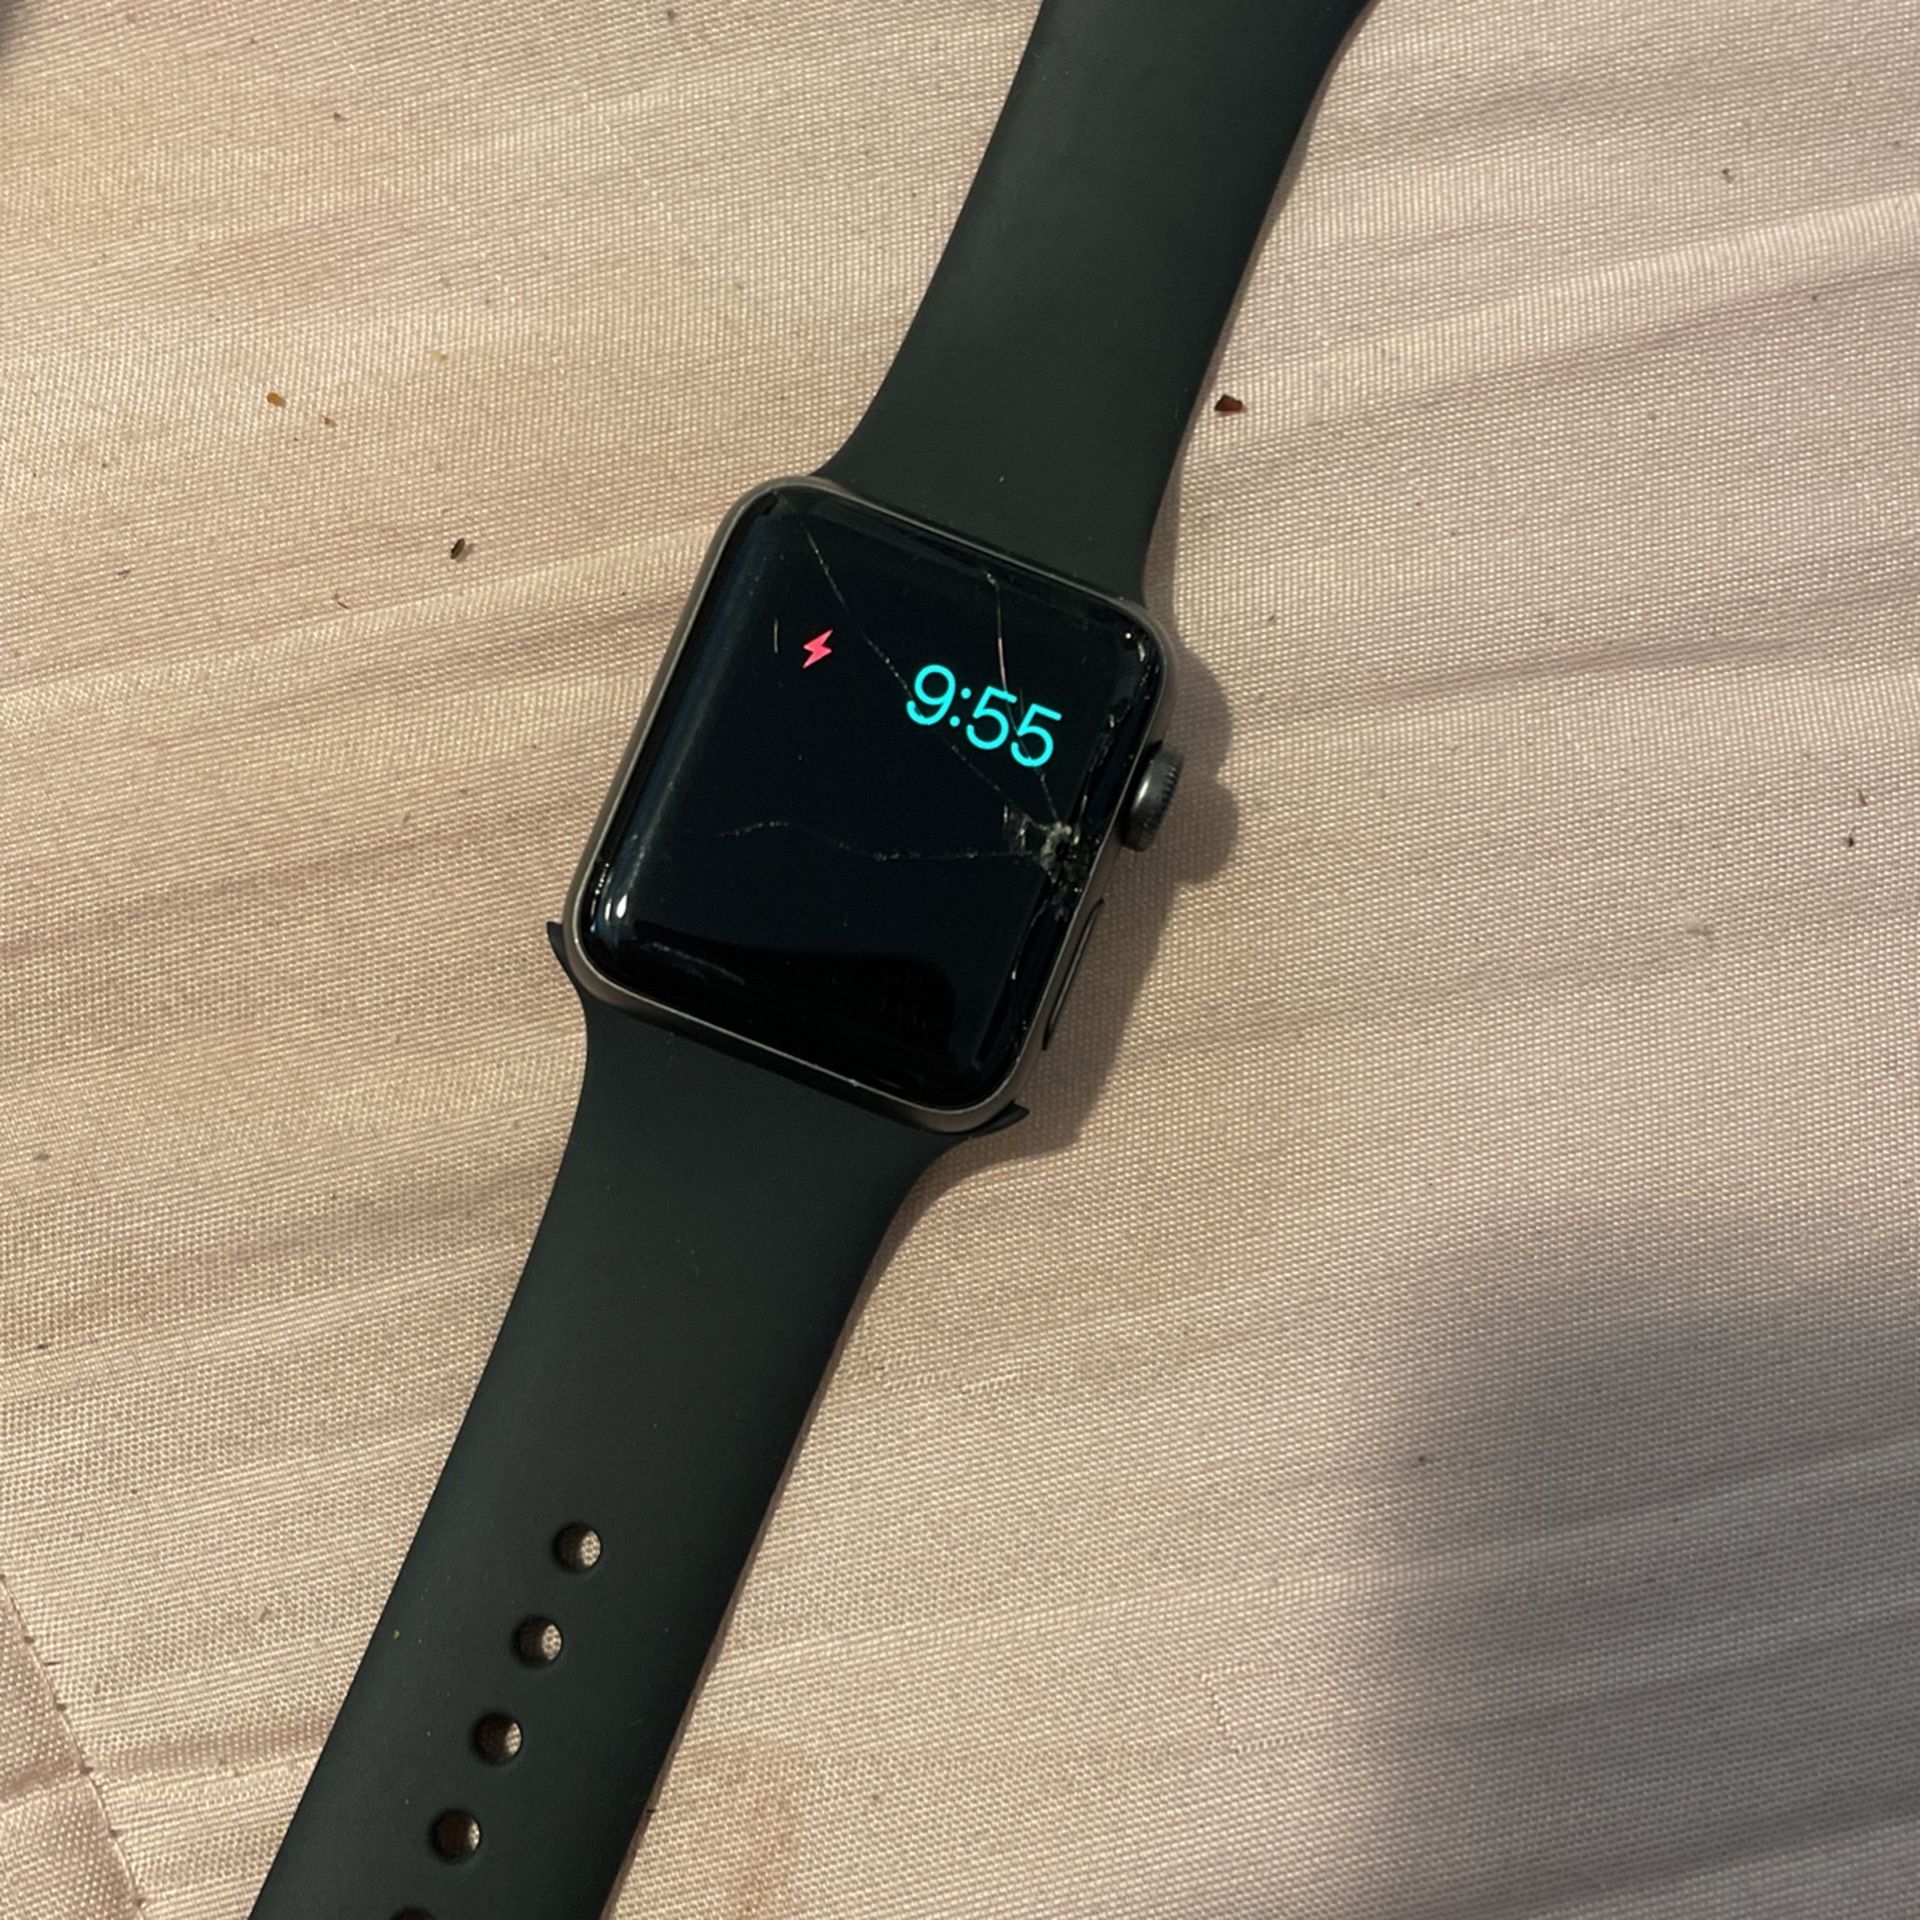 Apple Watch Needs Screen Replaced